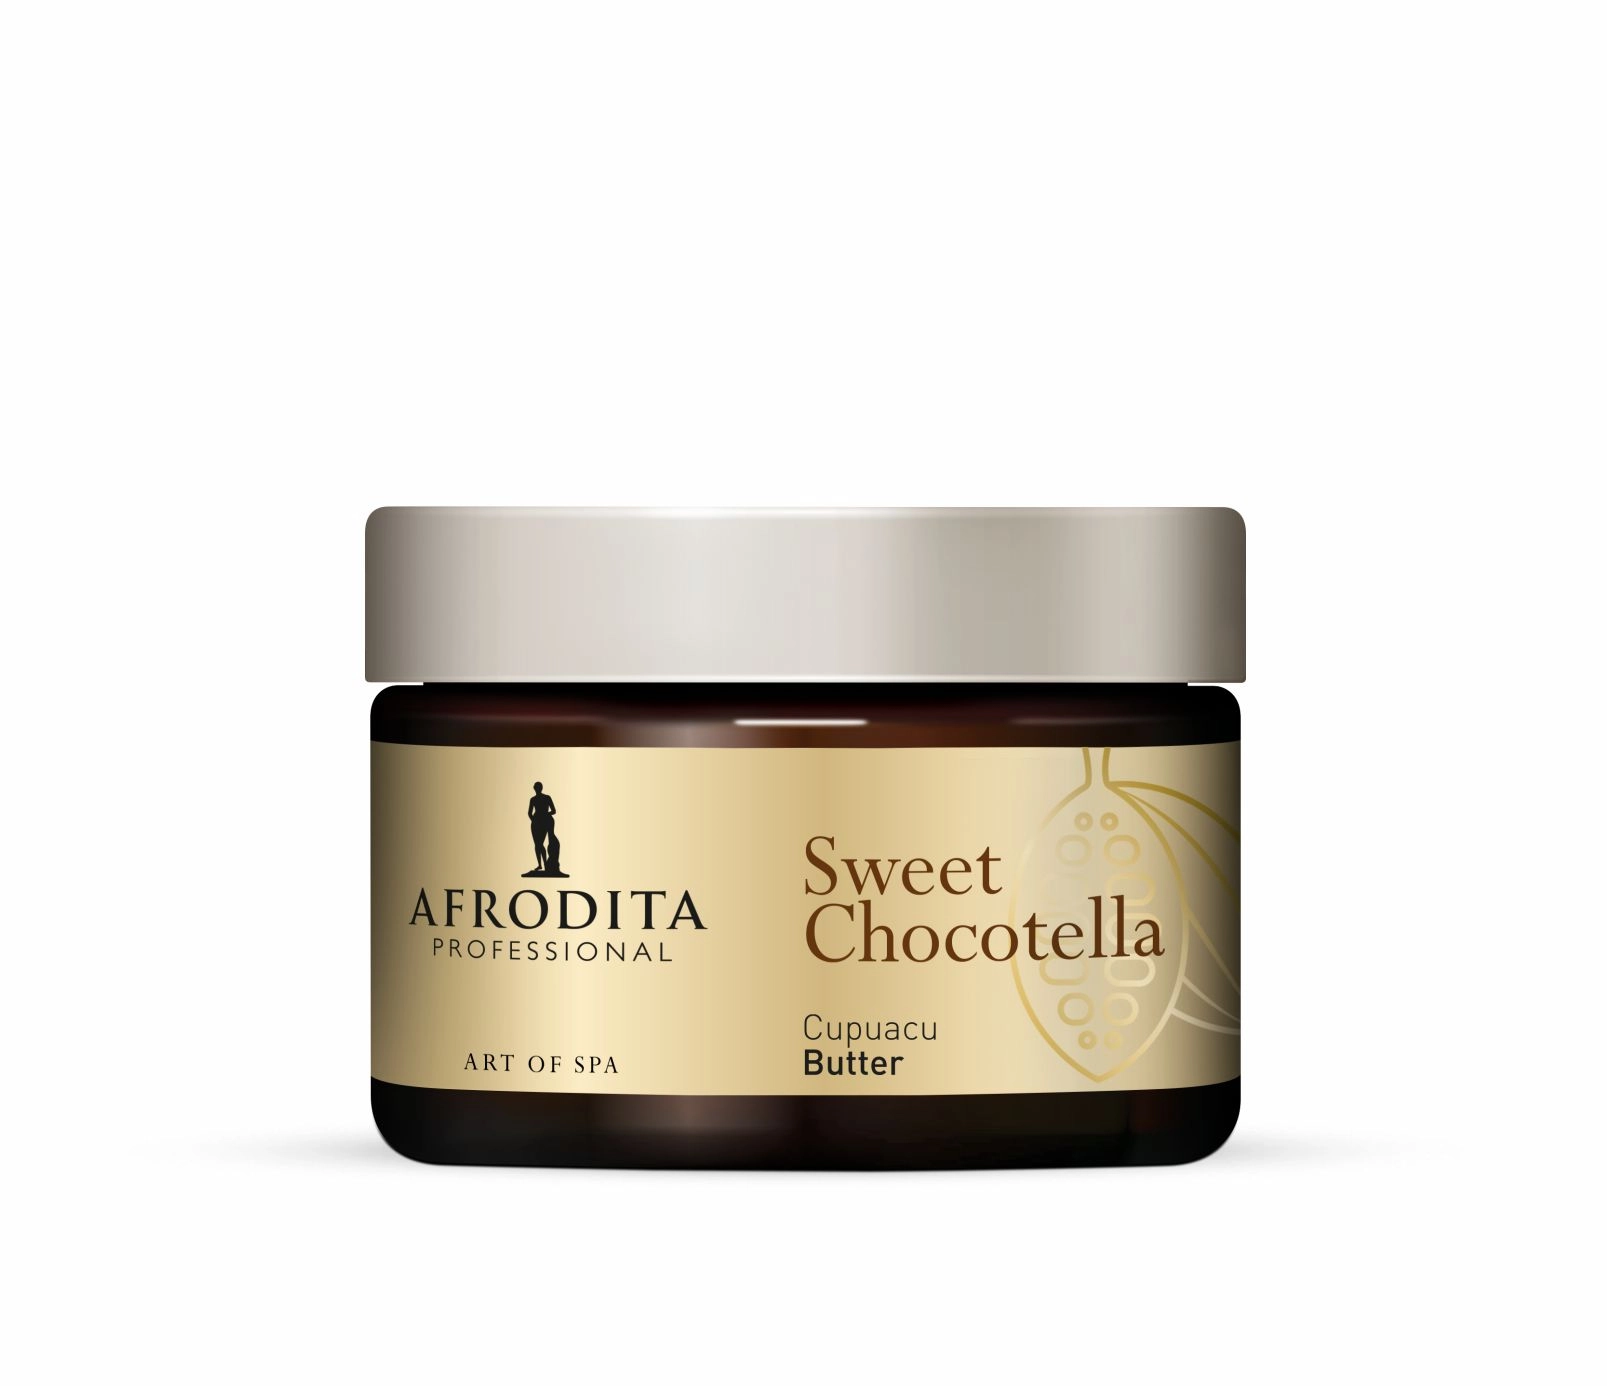 Afrodita ART OF SPA Sweet Chocotella Cupuacu testvaj 